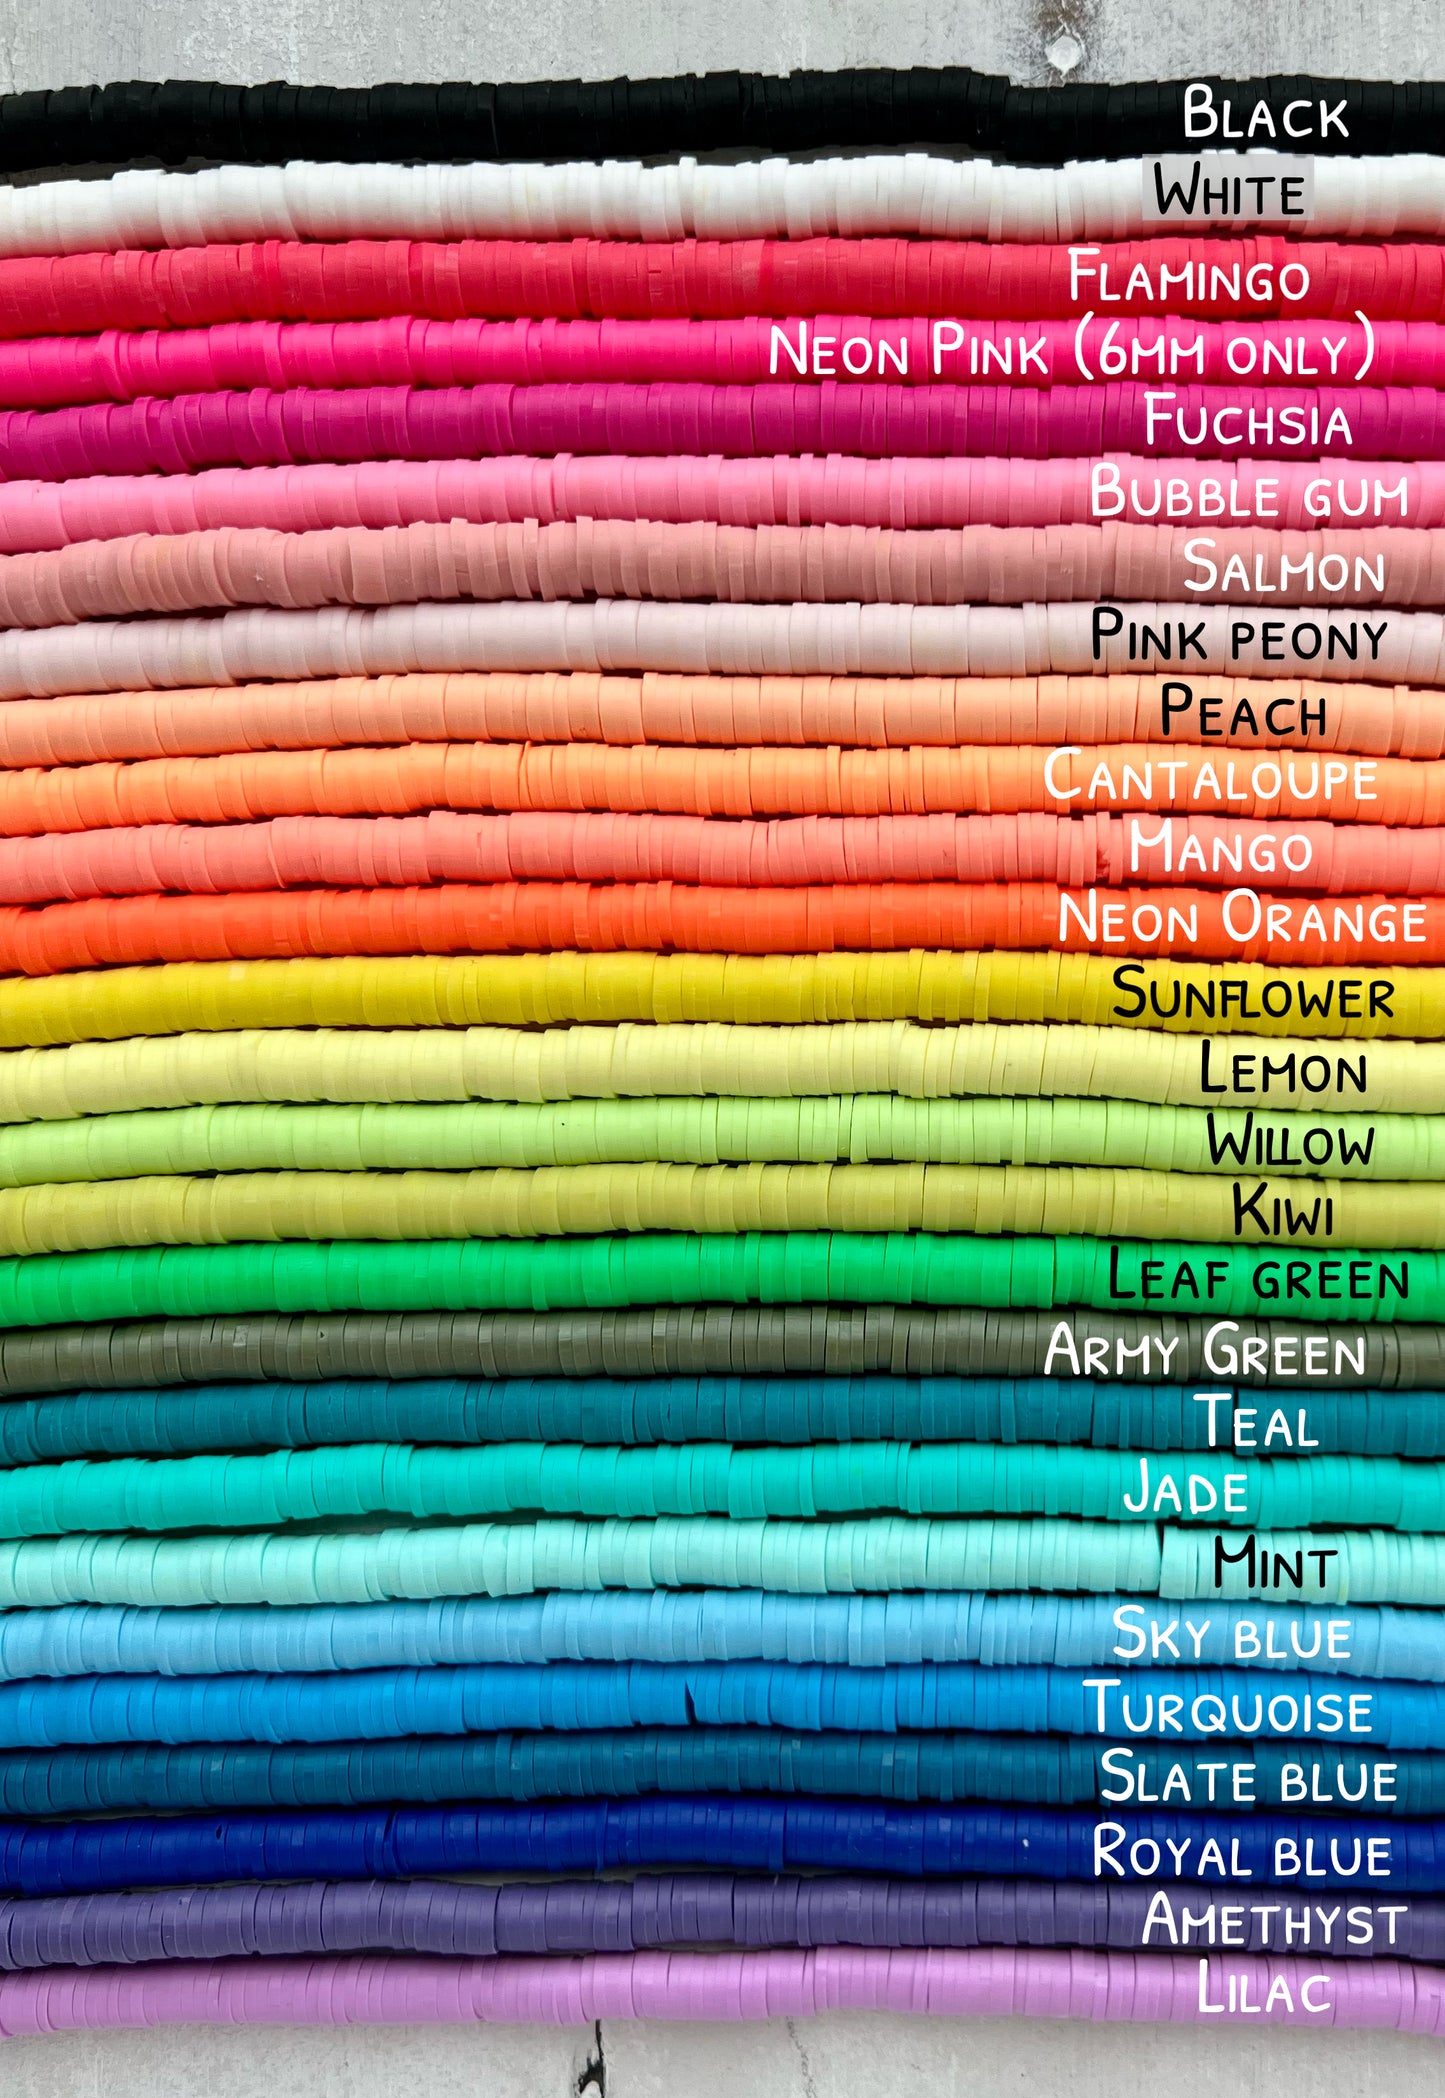 Neon Rainbow Heishi Bracelet